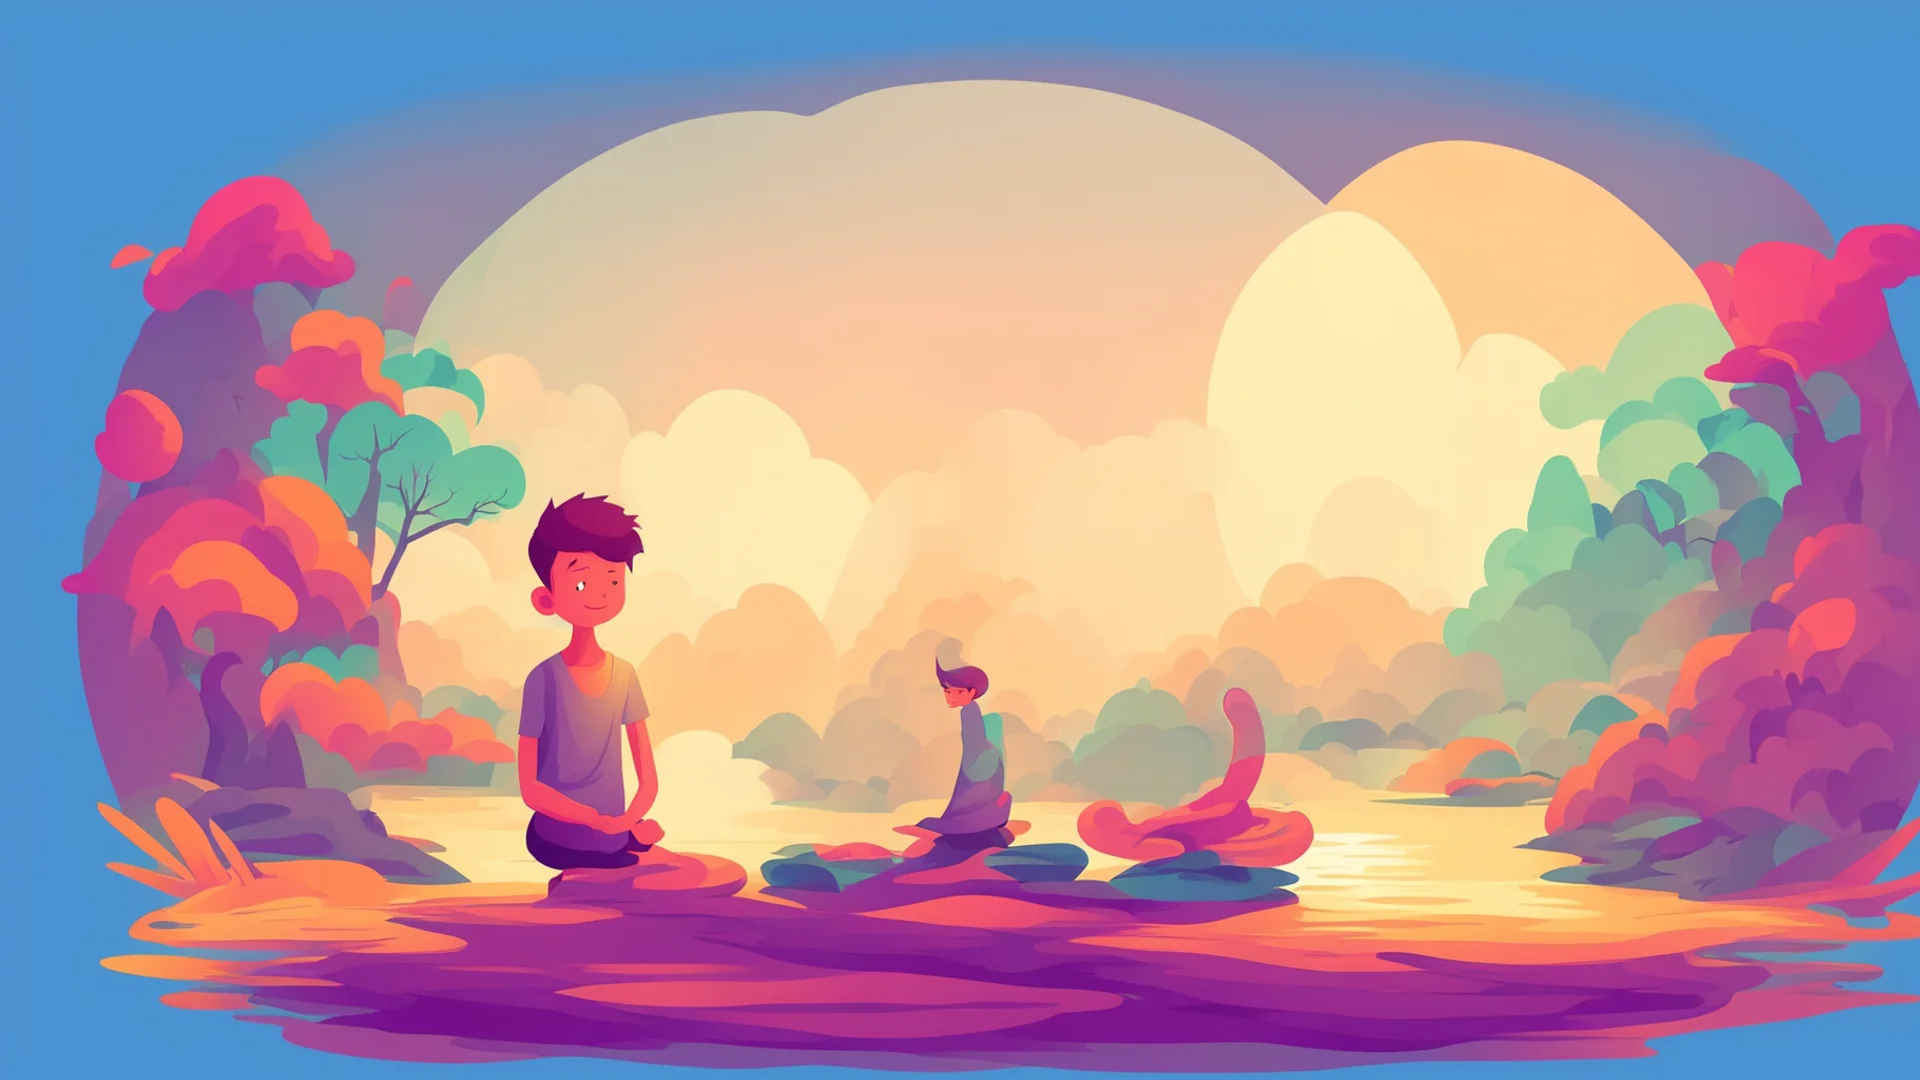 aiboy doing meditation in vector illustration good looking trending fantastic 1 wide